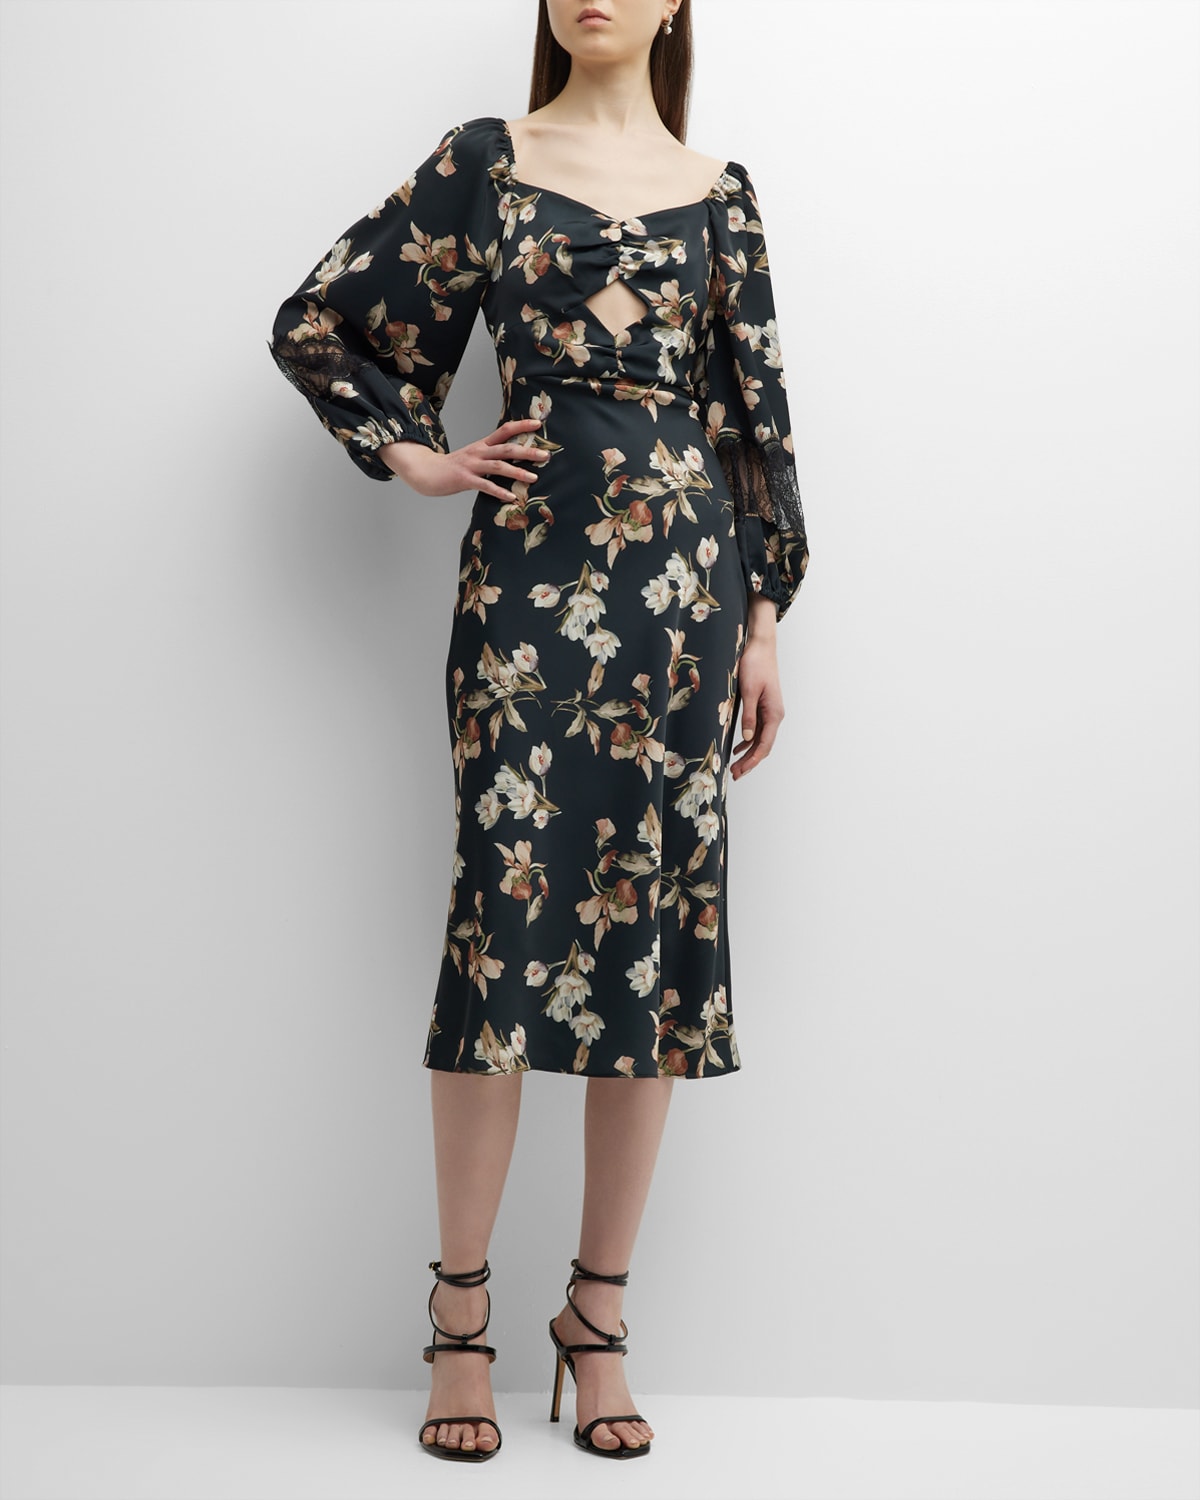 Amara Cutout Floral-Print Lace-Trim Dress